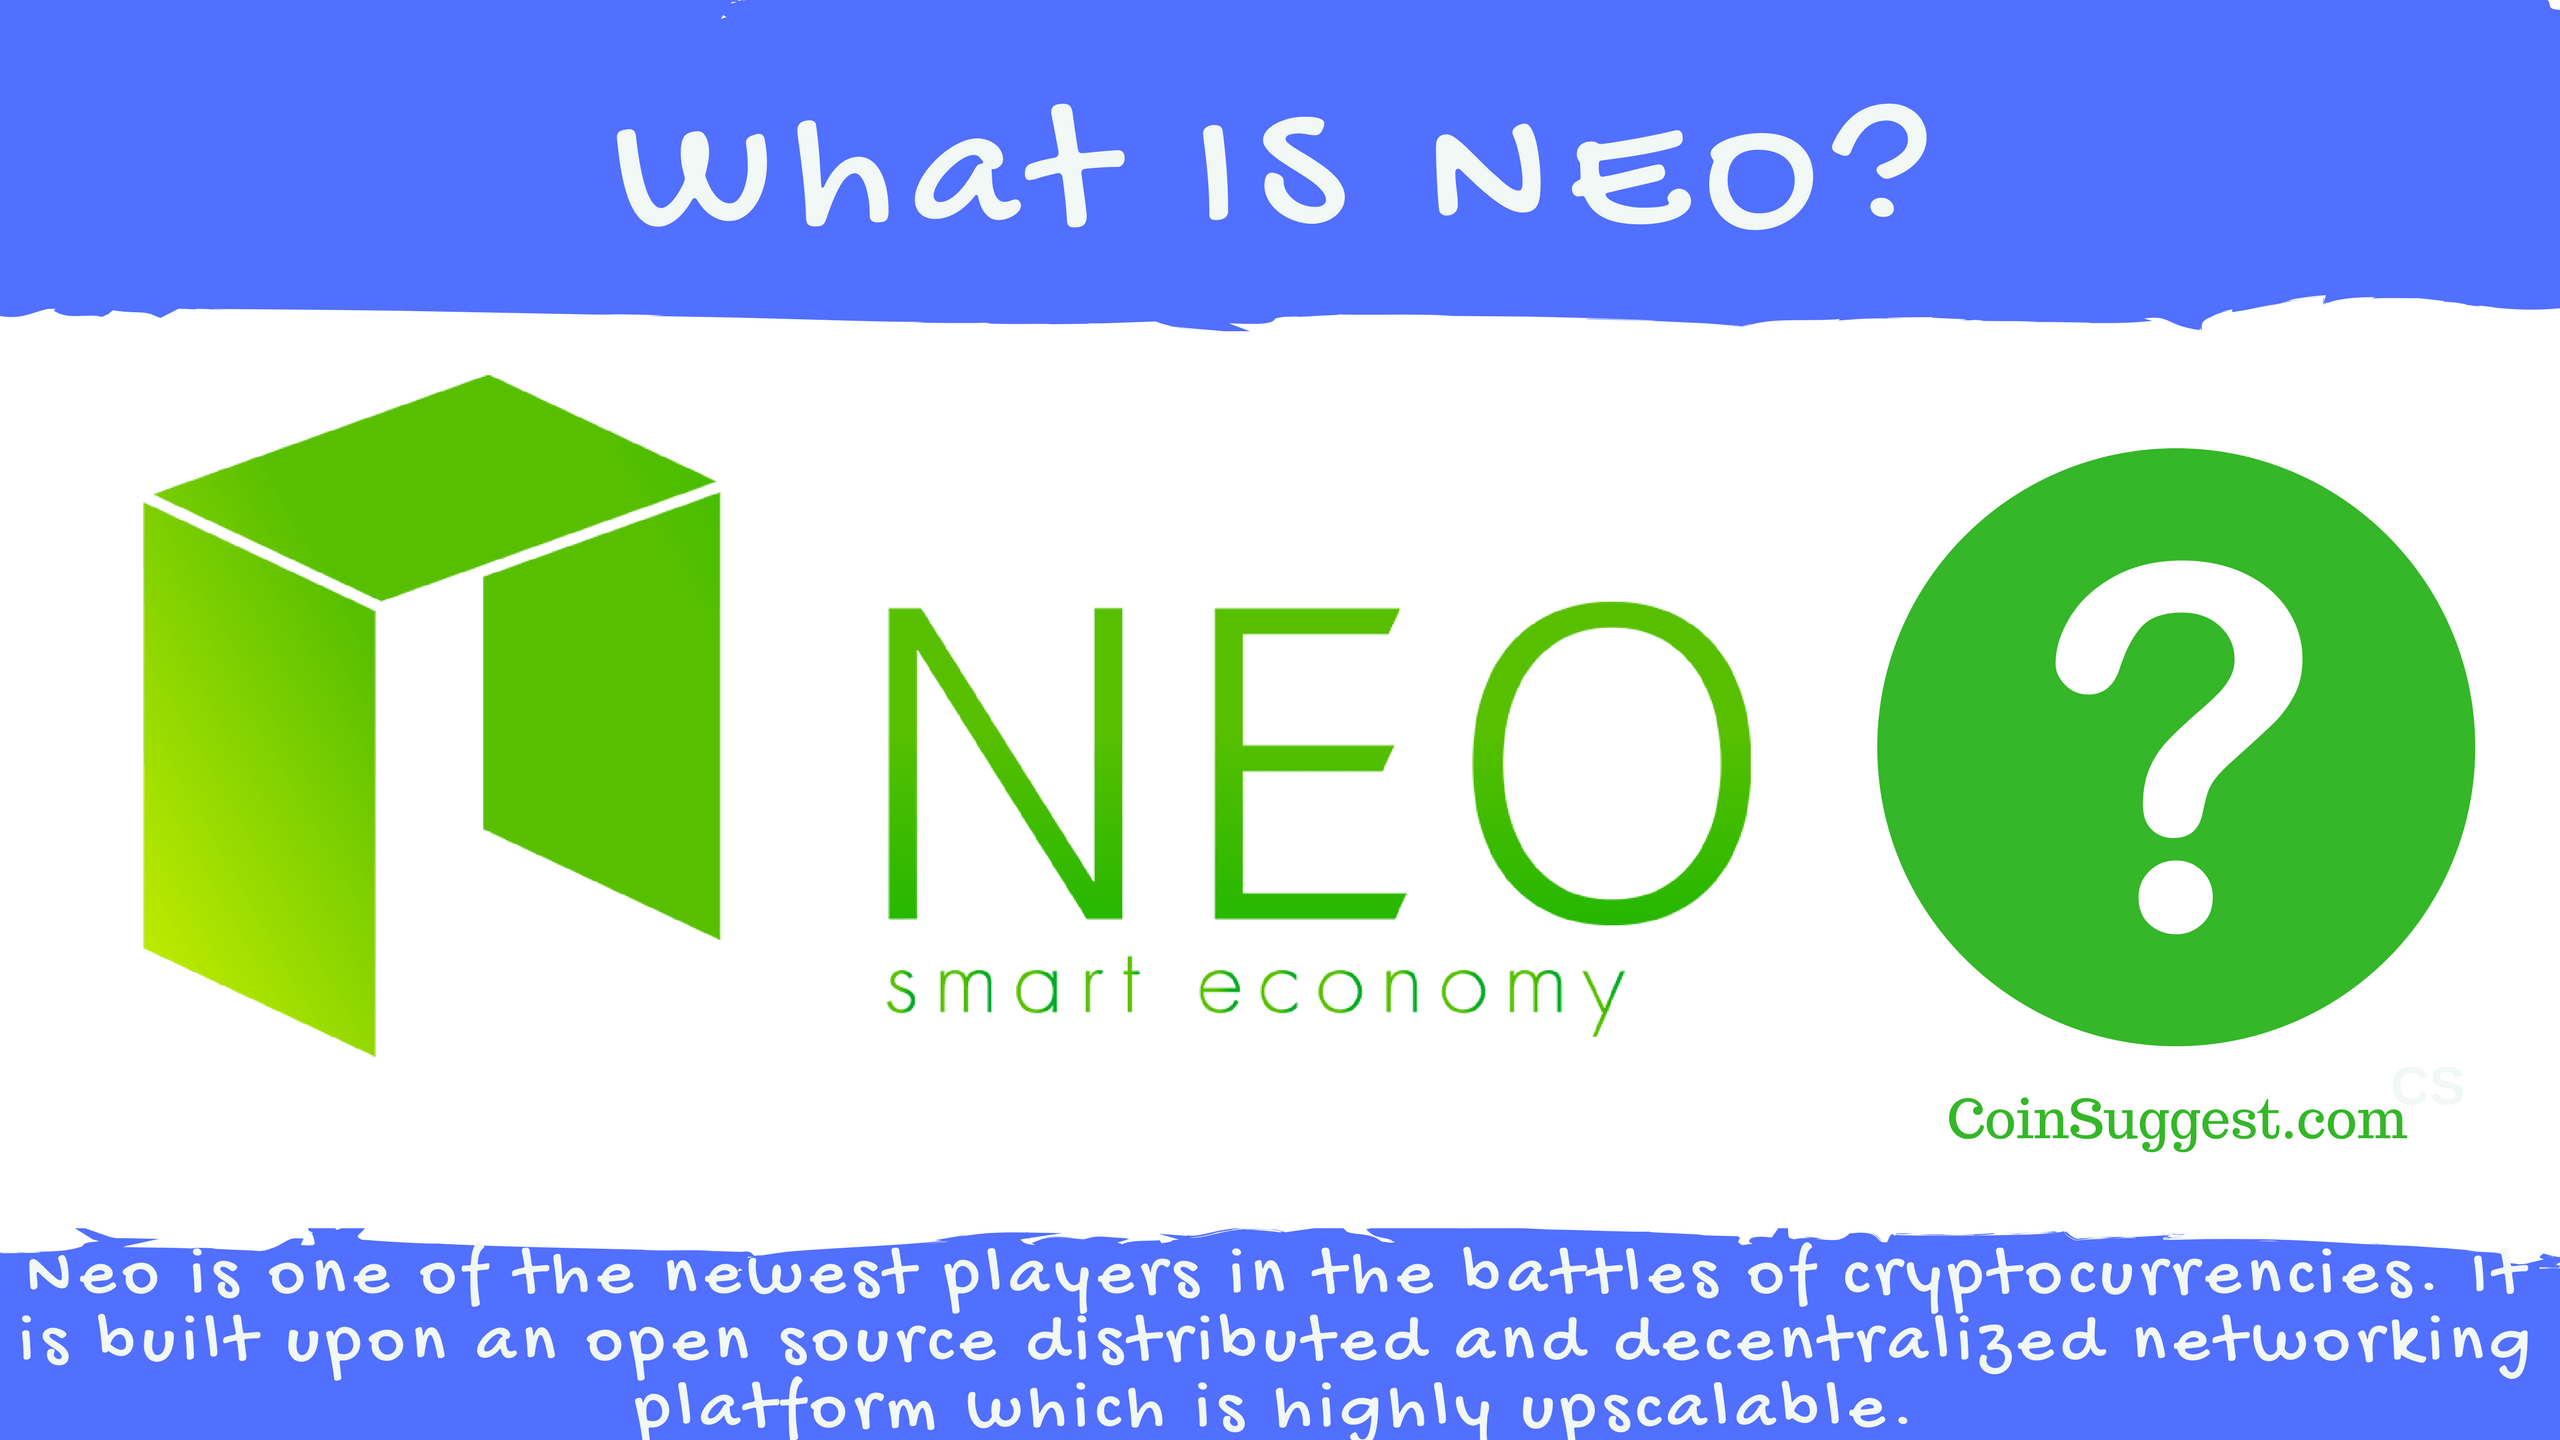 How To Buy NEO (Antshares) In 2020